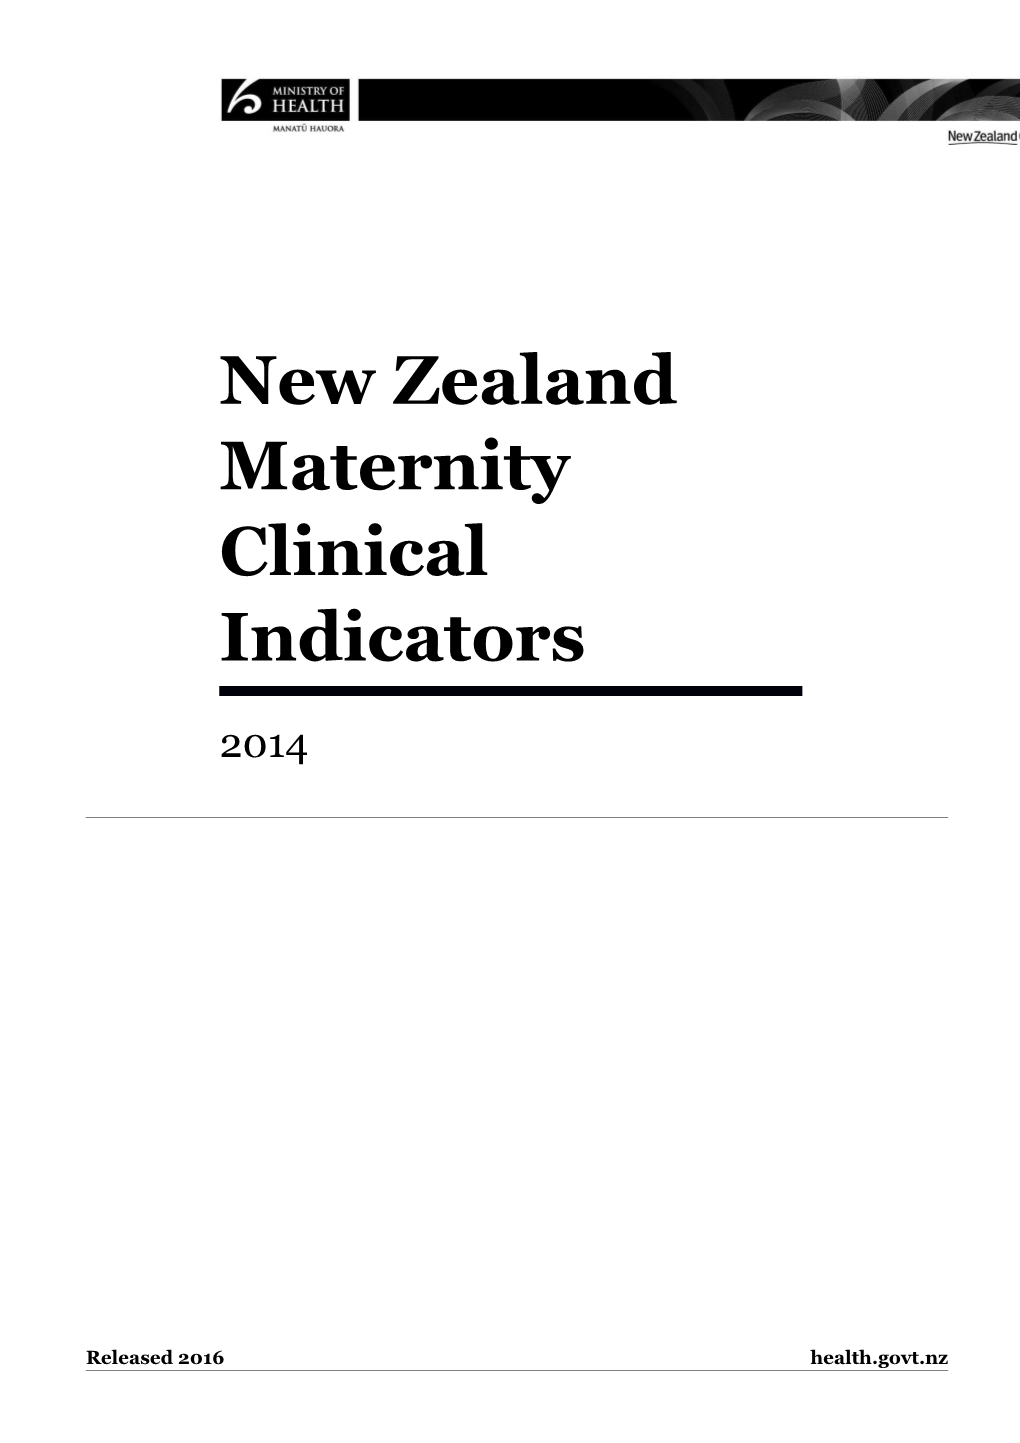 New Zealand Maternity Clinical Indicators 2014